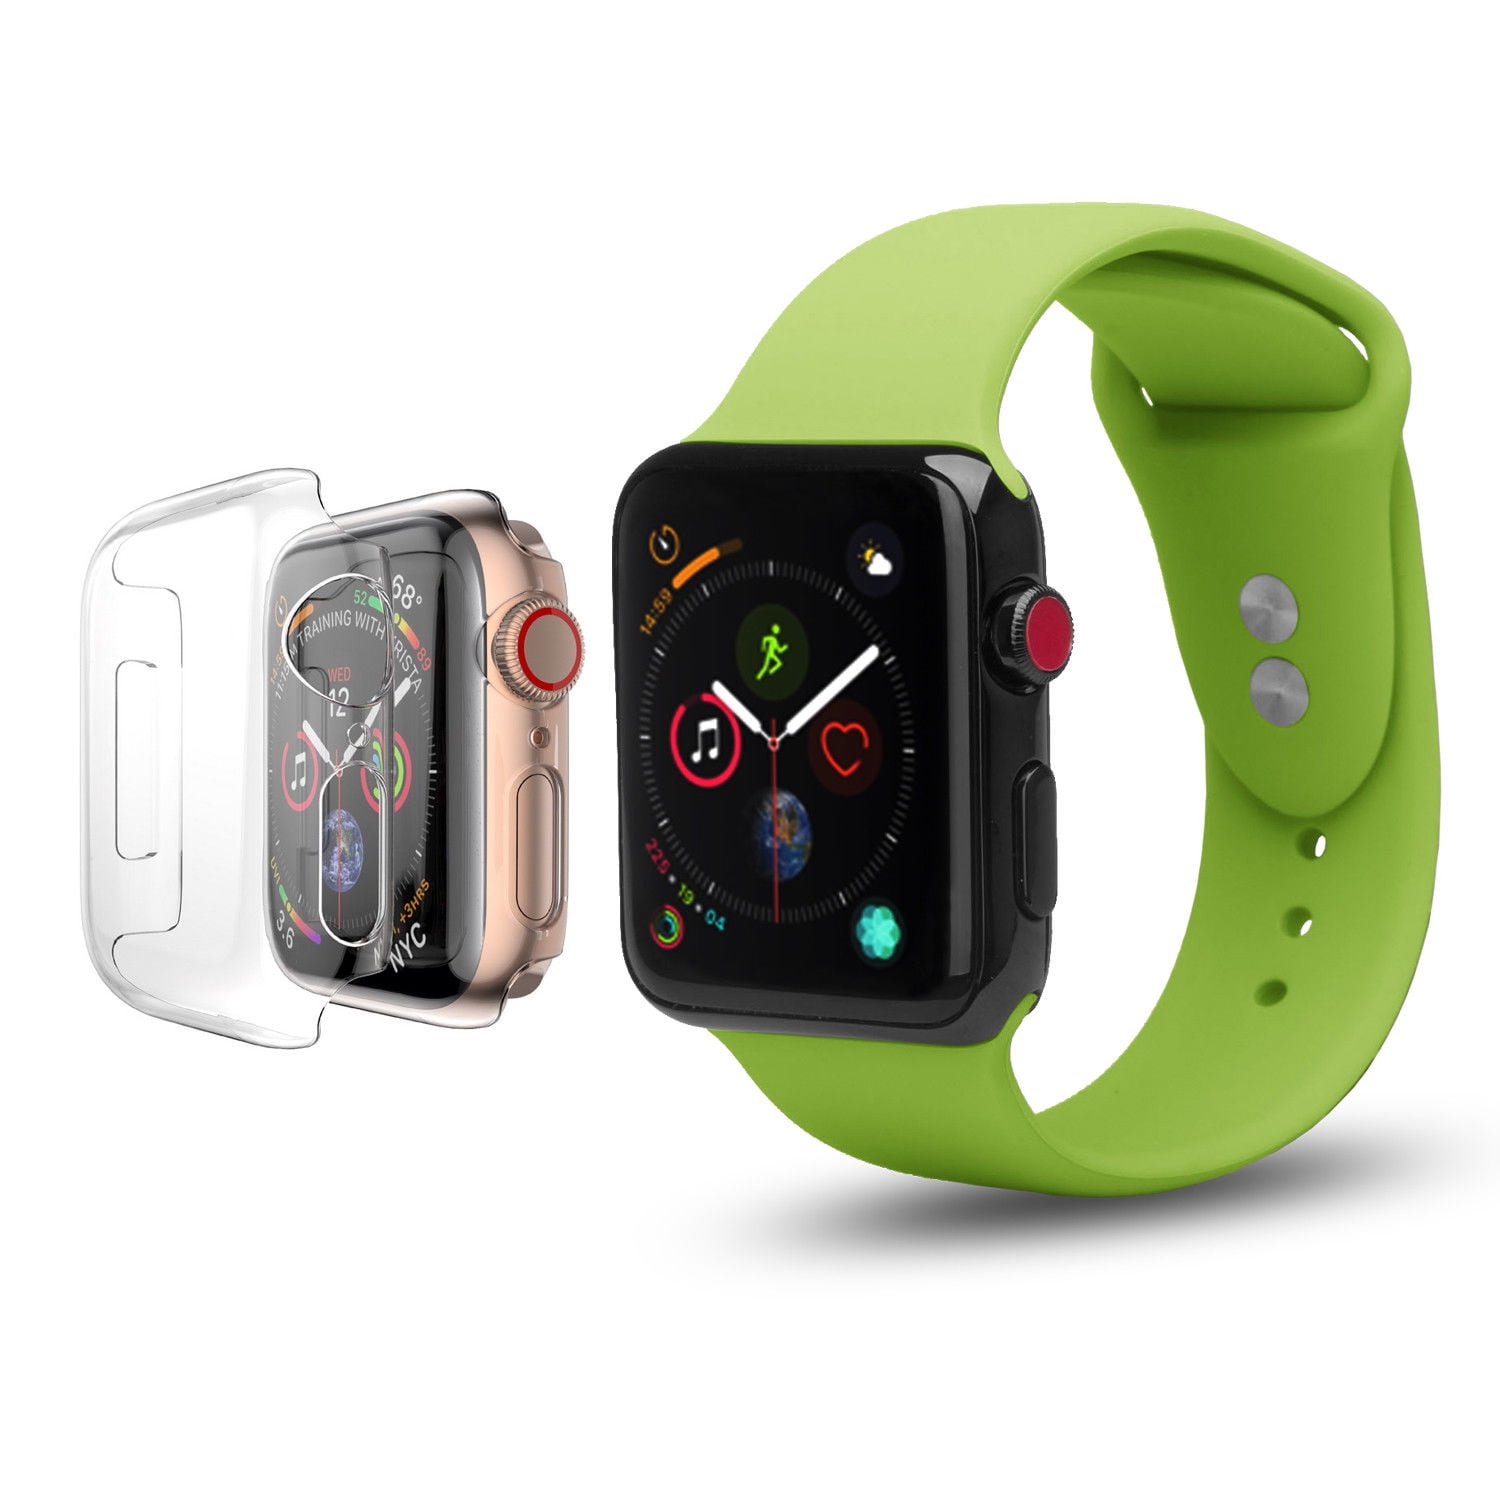 Apple Watch Band Walmart on Sale, 52% OFF | www.ingeniovirtual.com